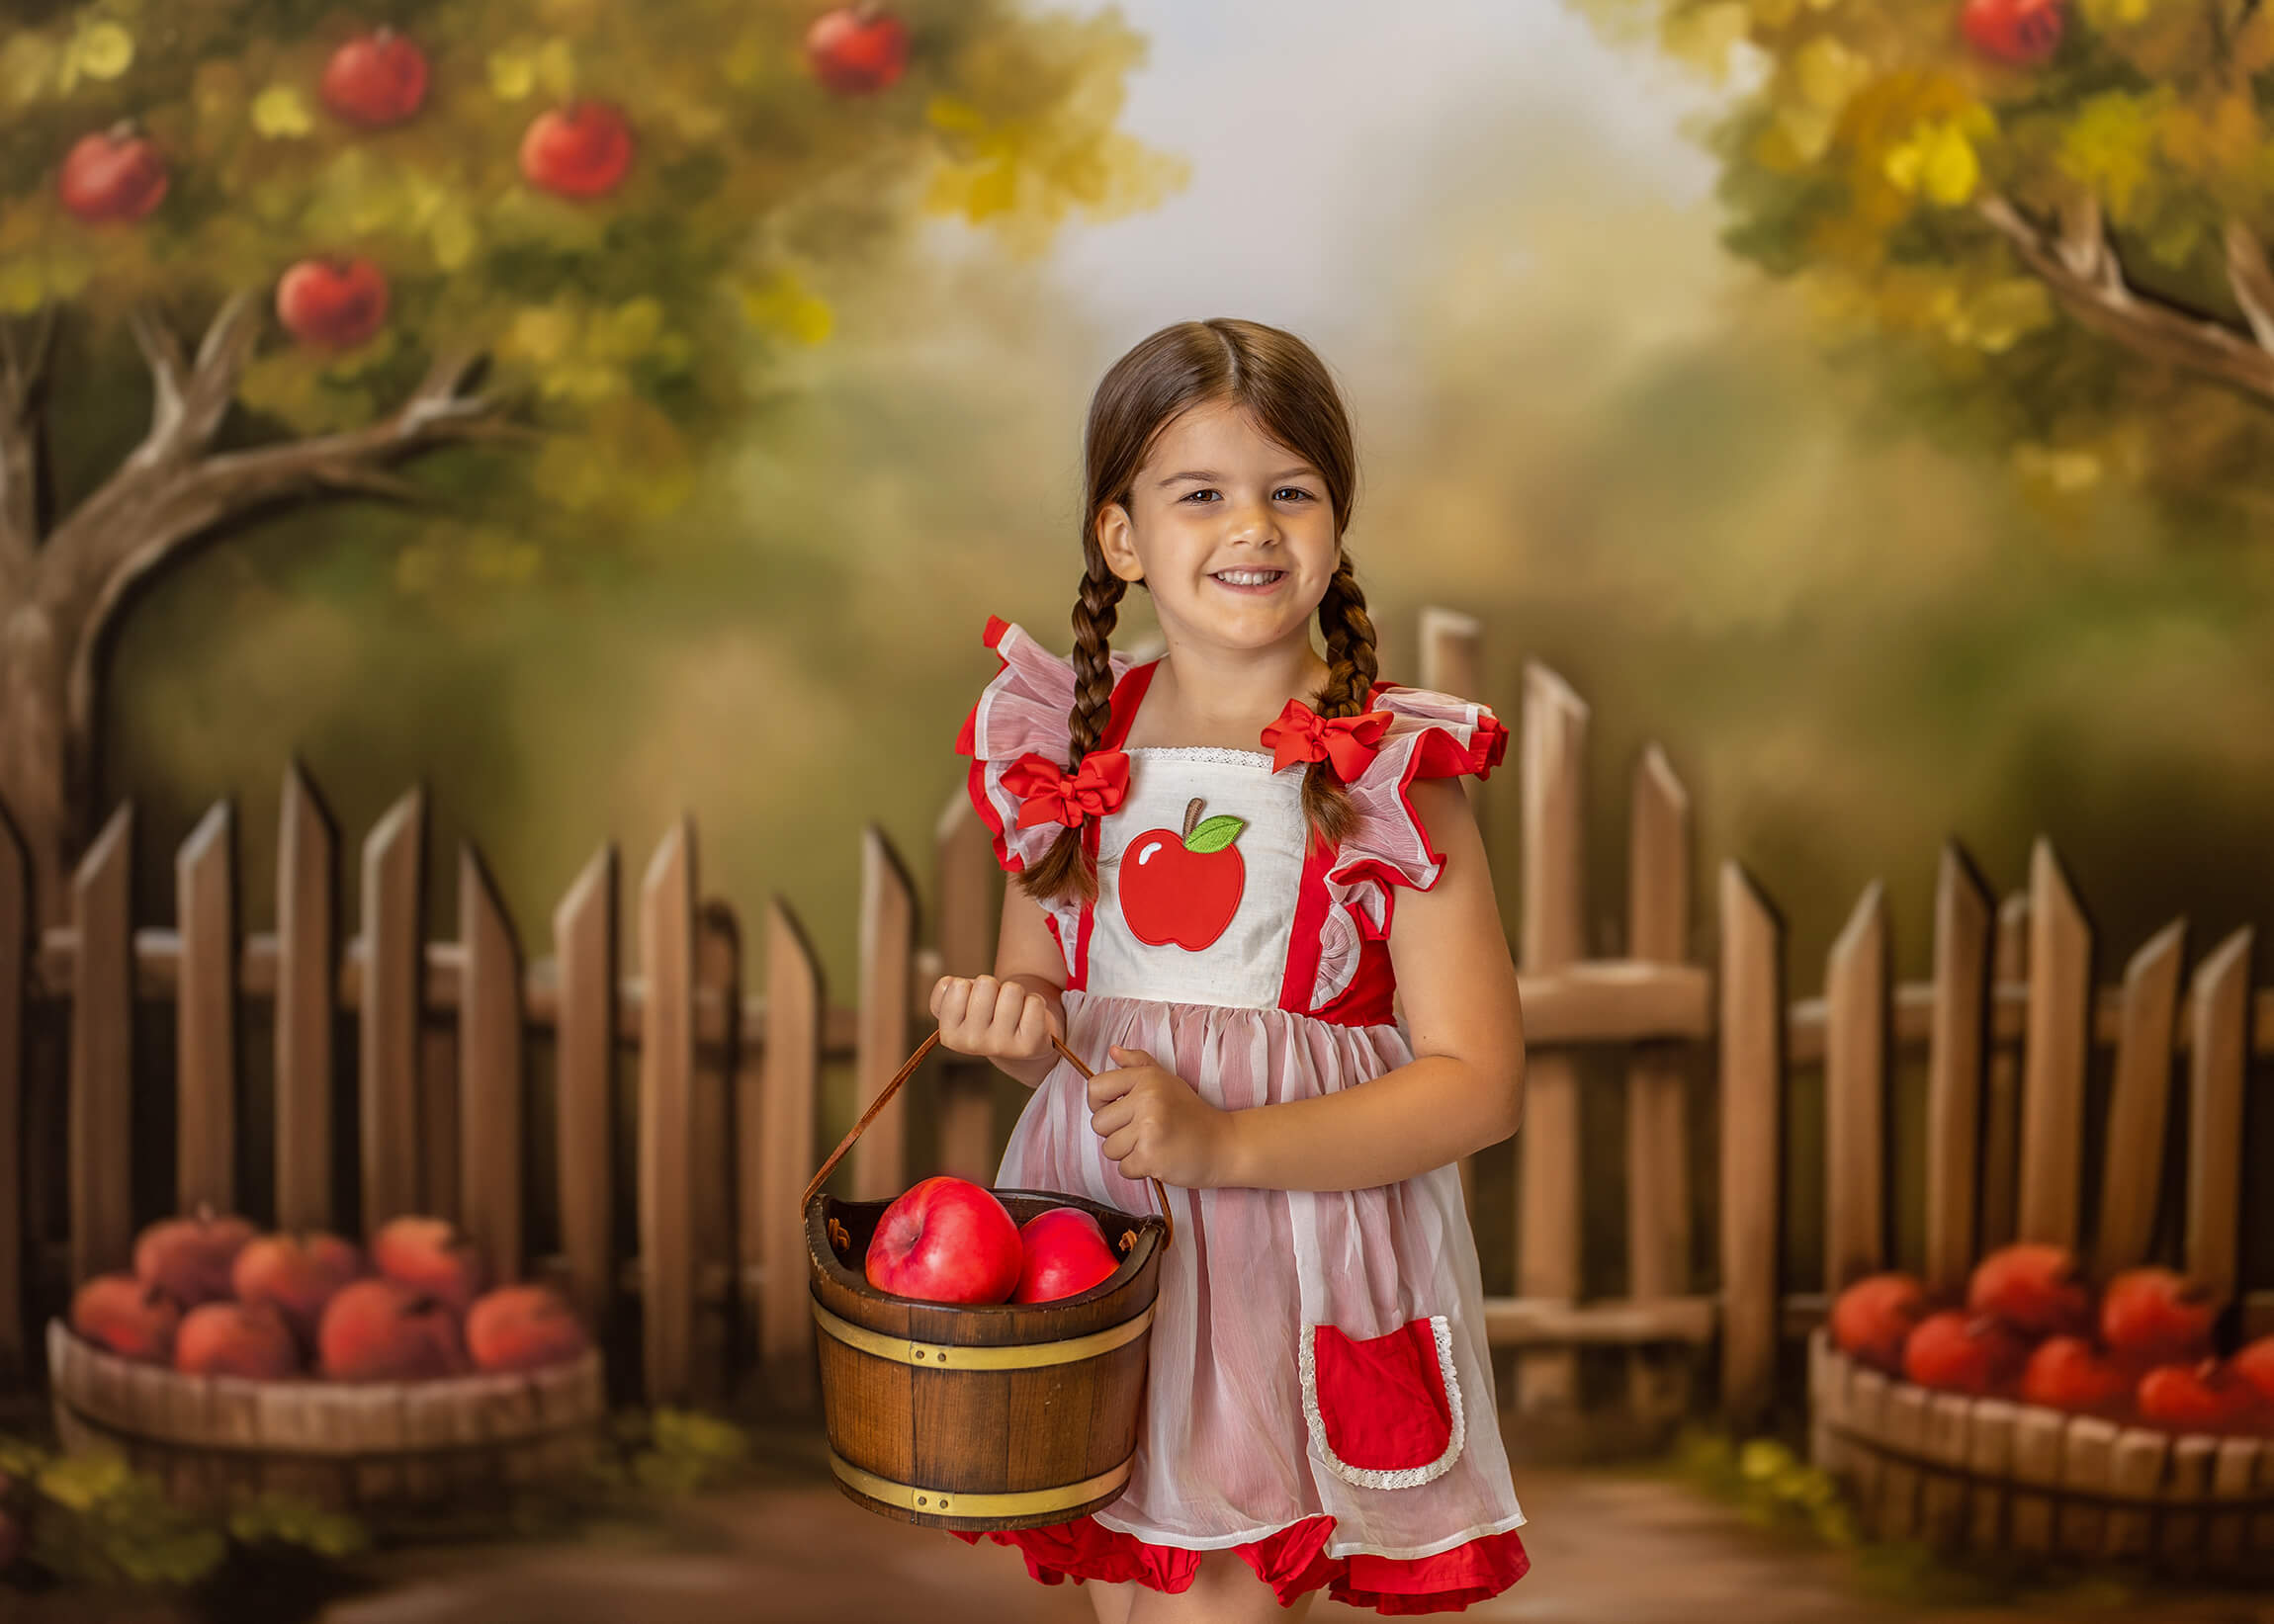 A little girl is wearing an apple dress, carrying a basket of apples.